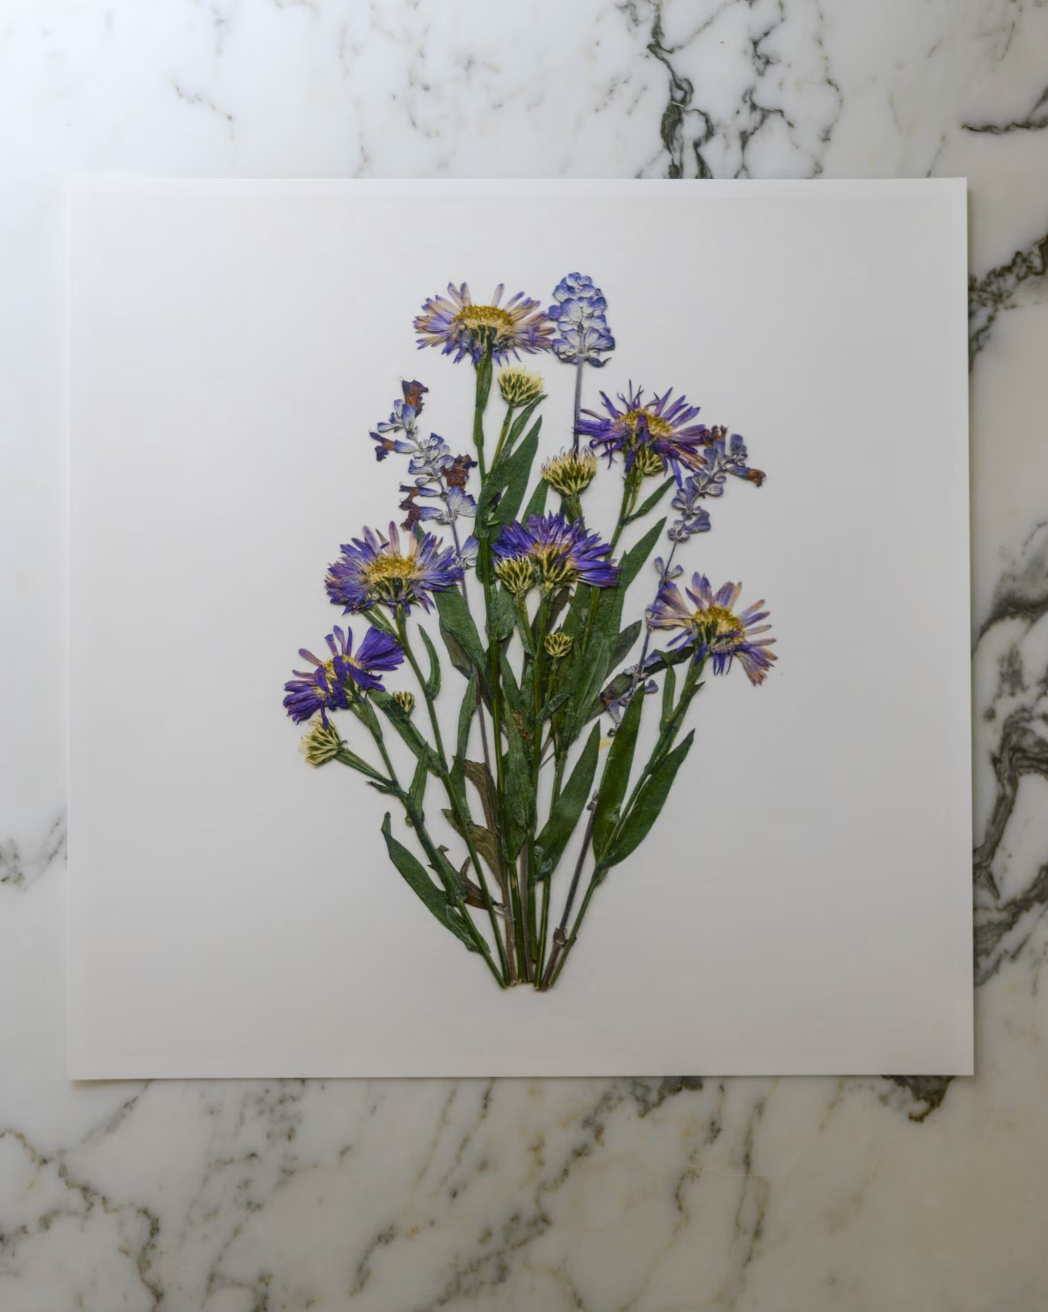 Birthday Bouquets - Art Print of Pressed Flowers